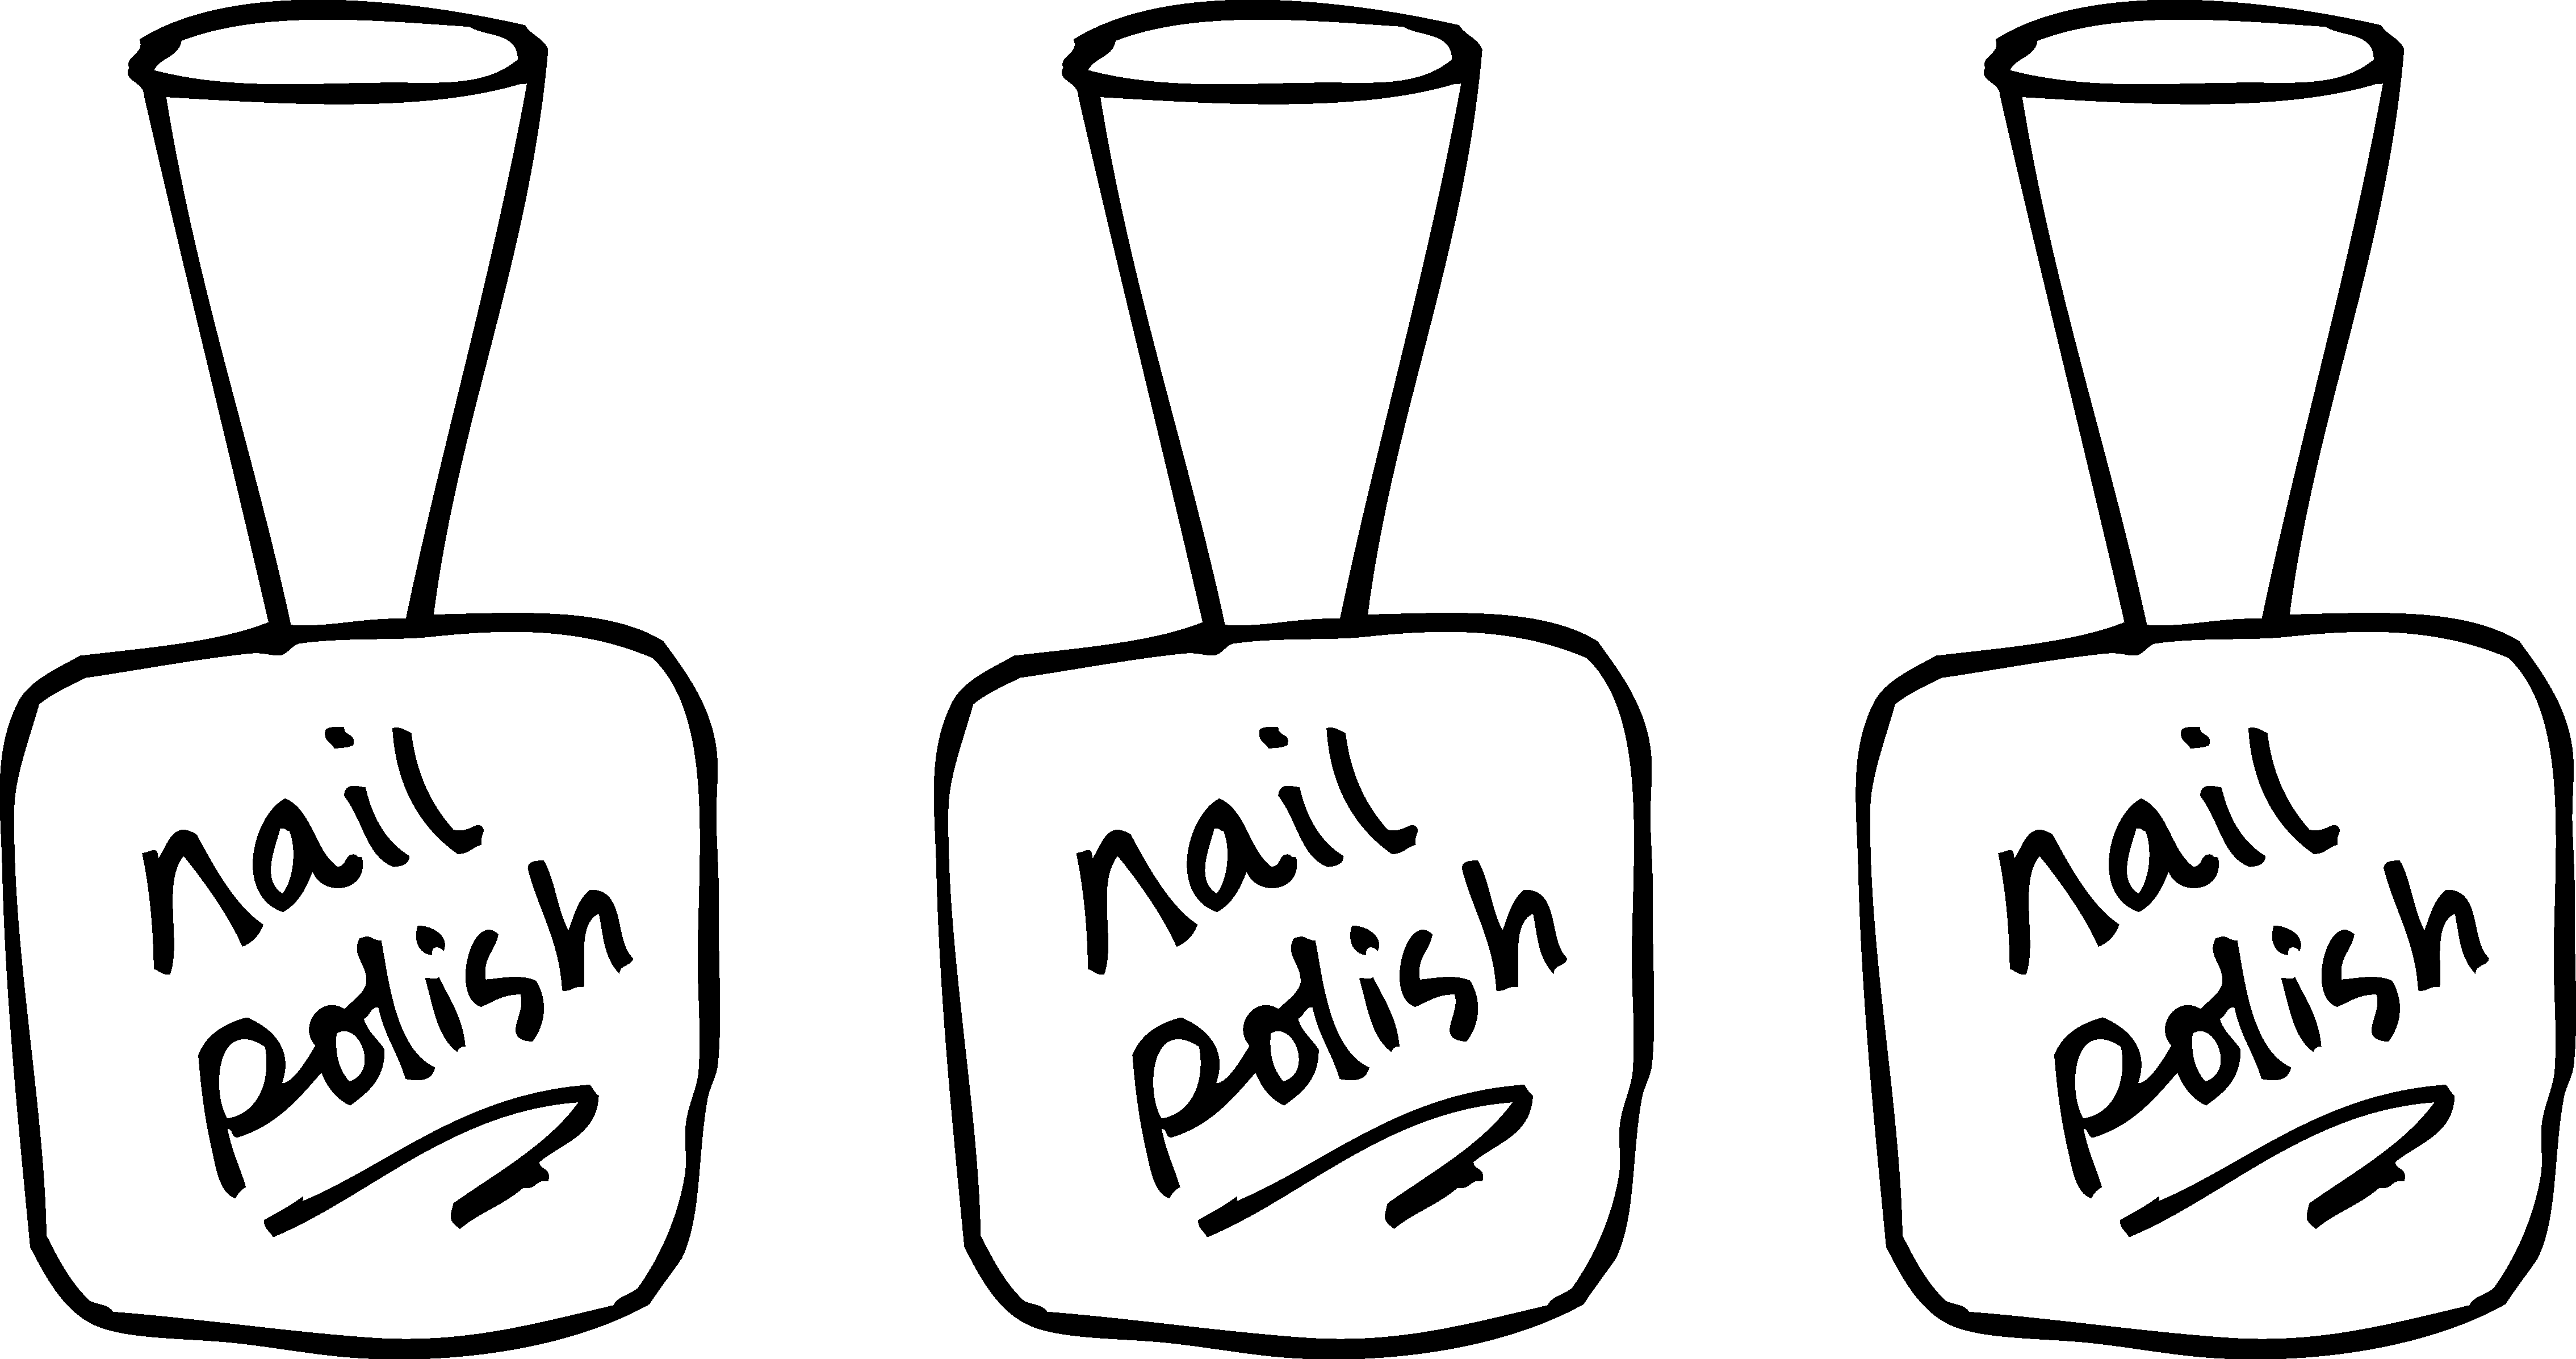 7. Nail Polish Bottle Clip Art - wide 6